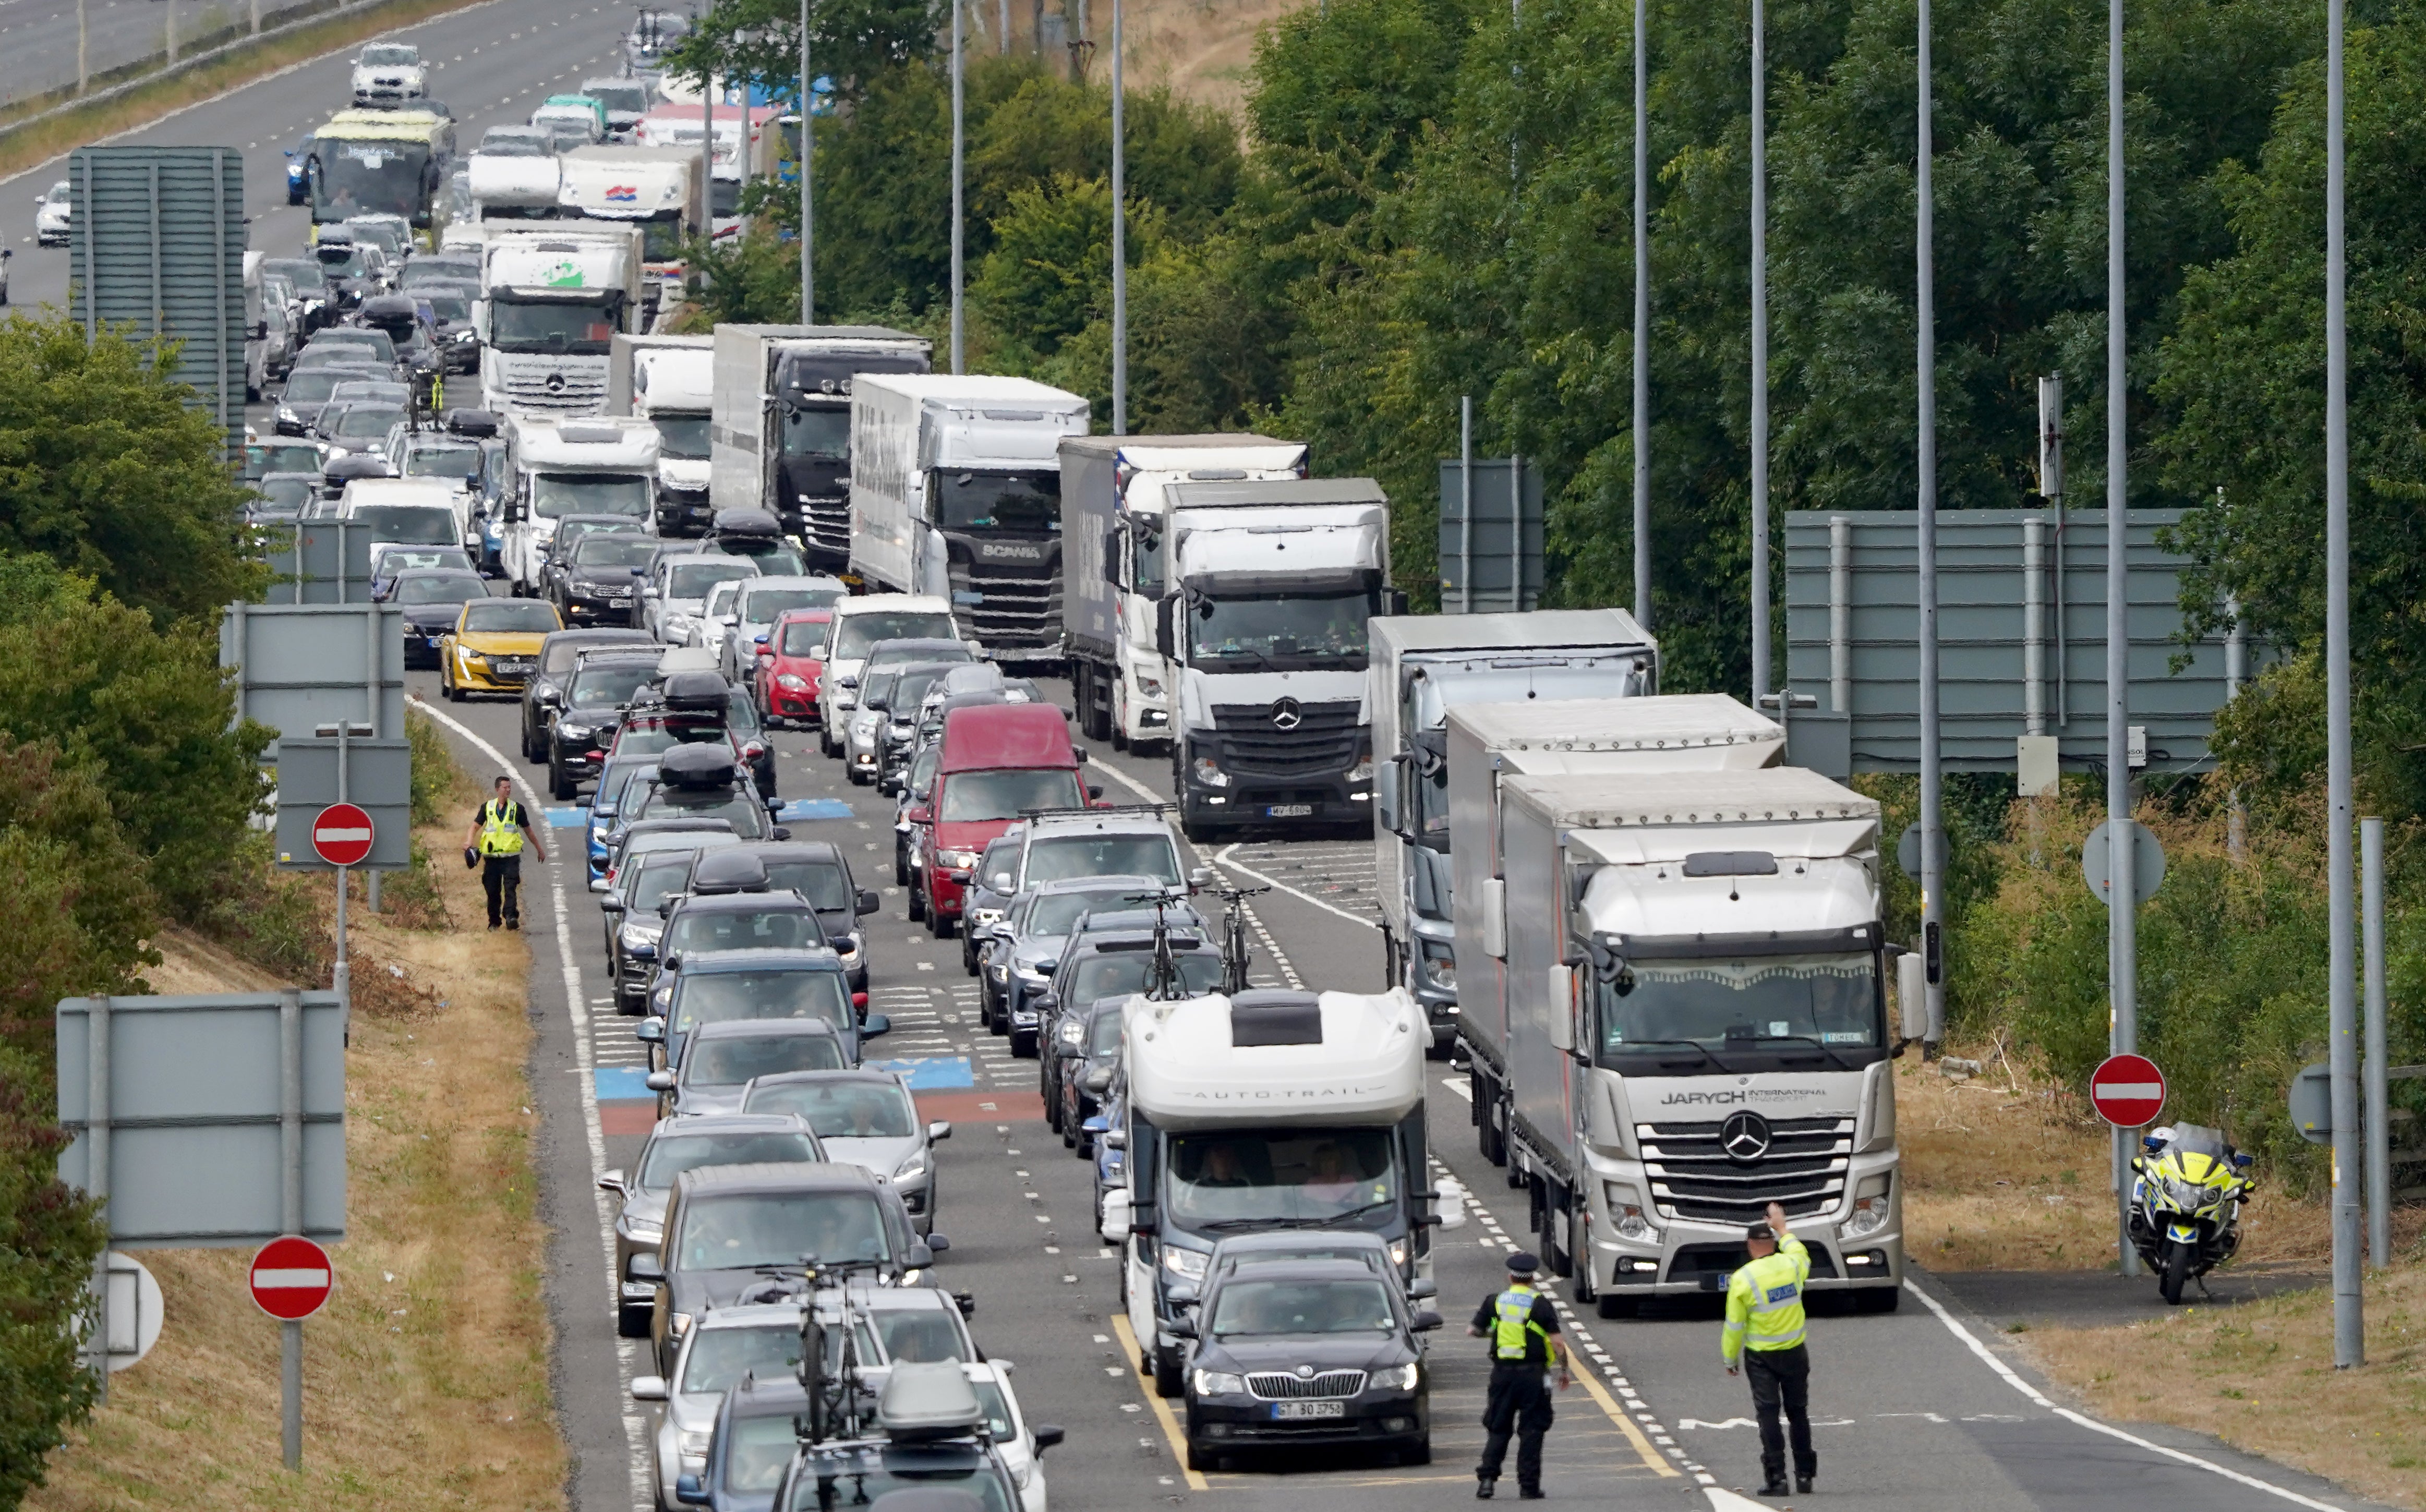 Passengers queue to enter the Eurotunnel site in Folkestone, Kent (Gareth Fuller/PA)